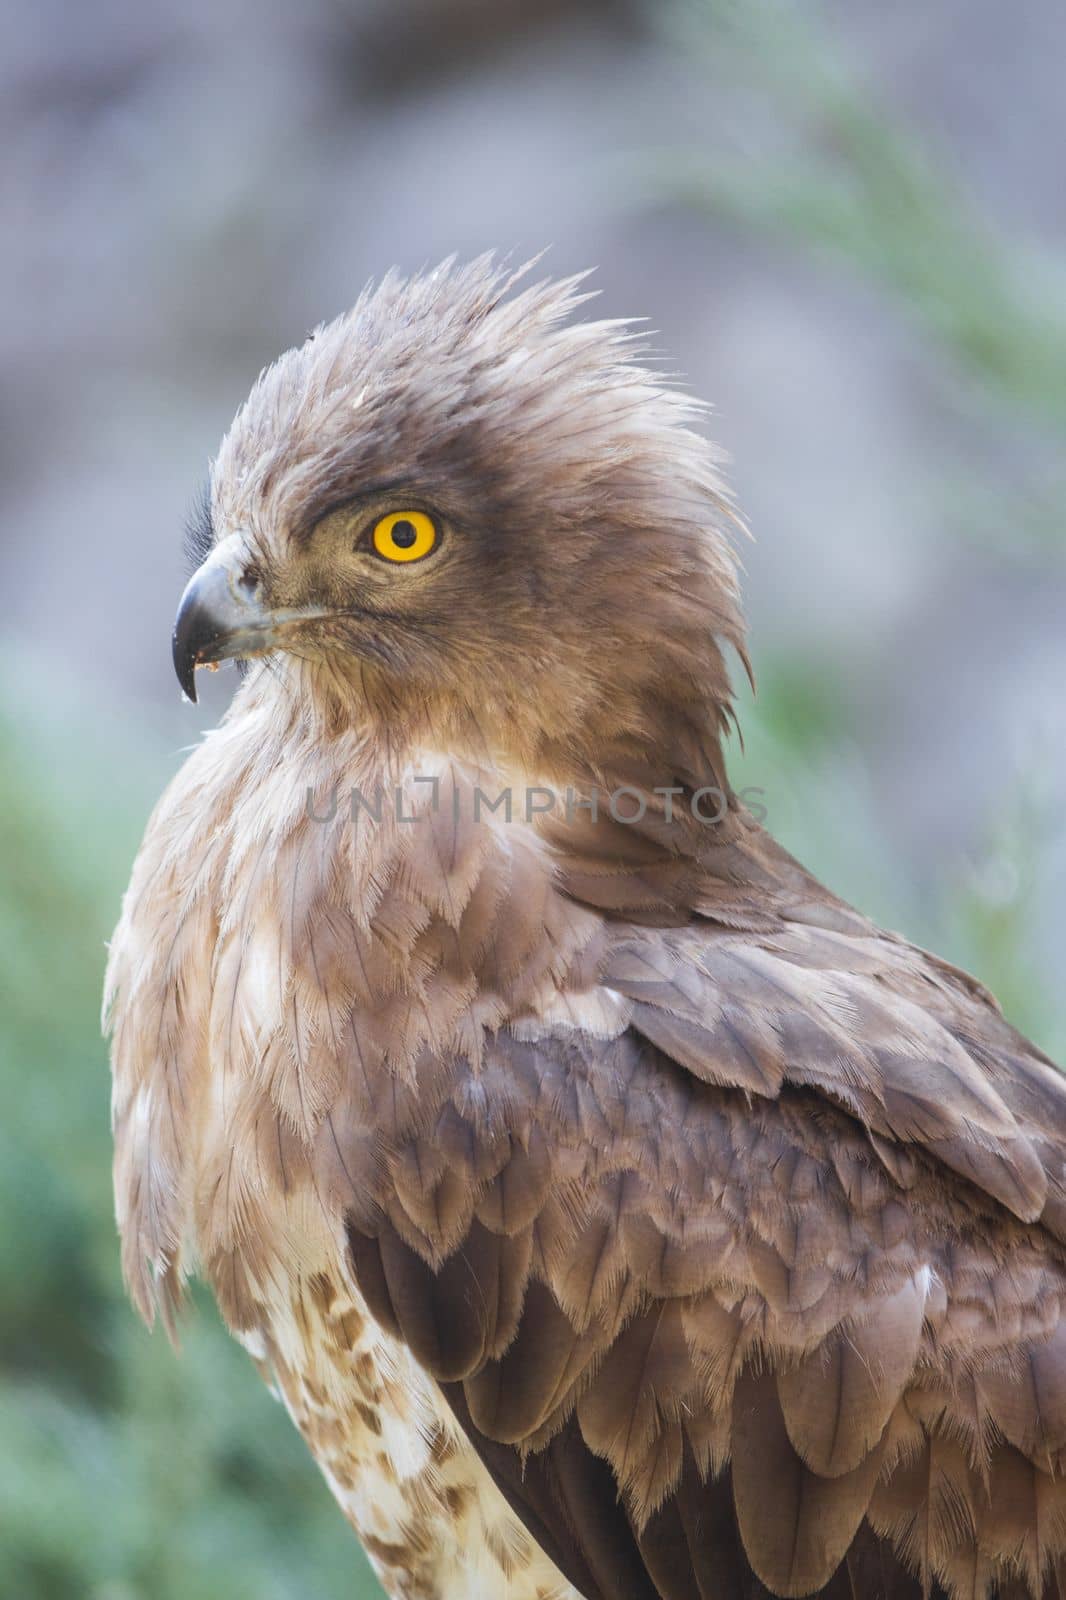 Eagle Close Up Portrait quality photo by senkaya